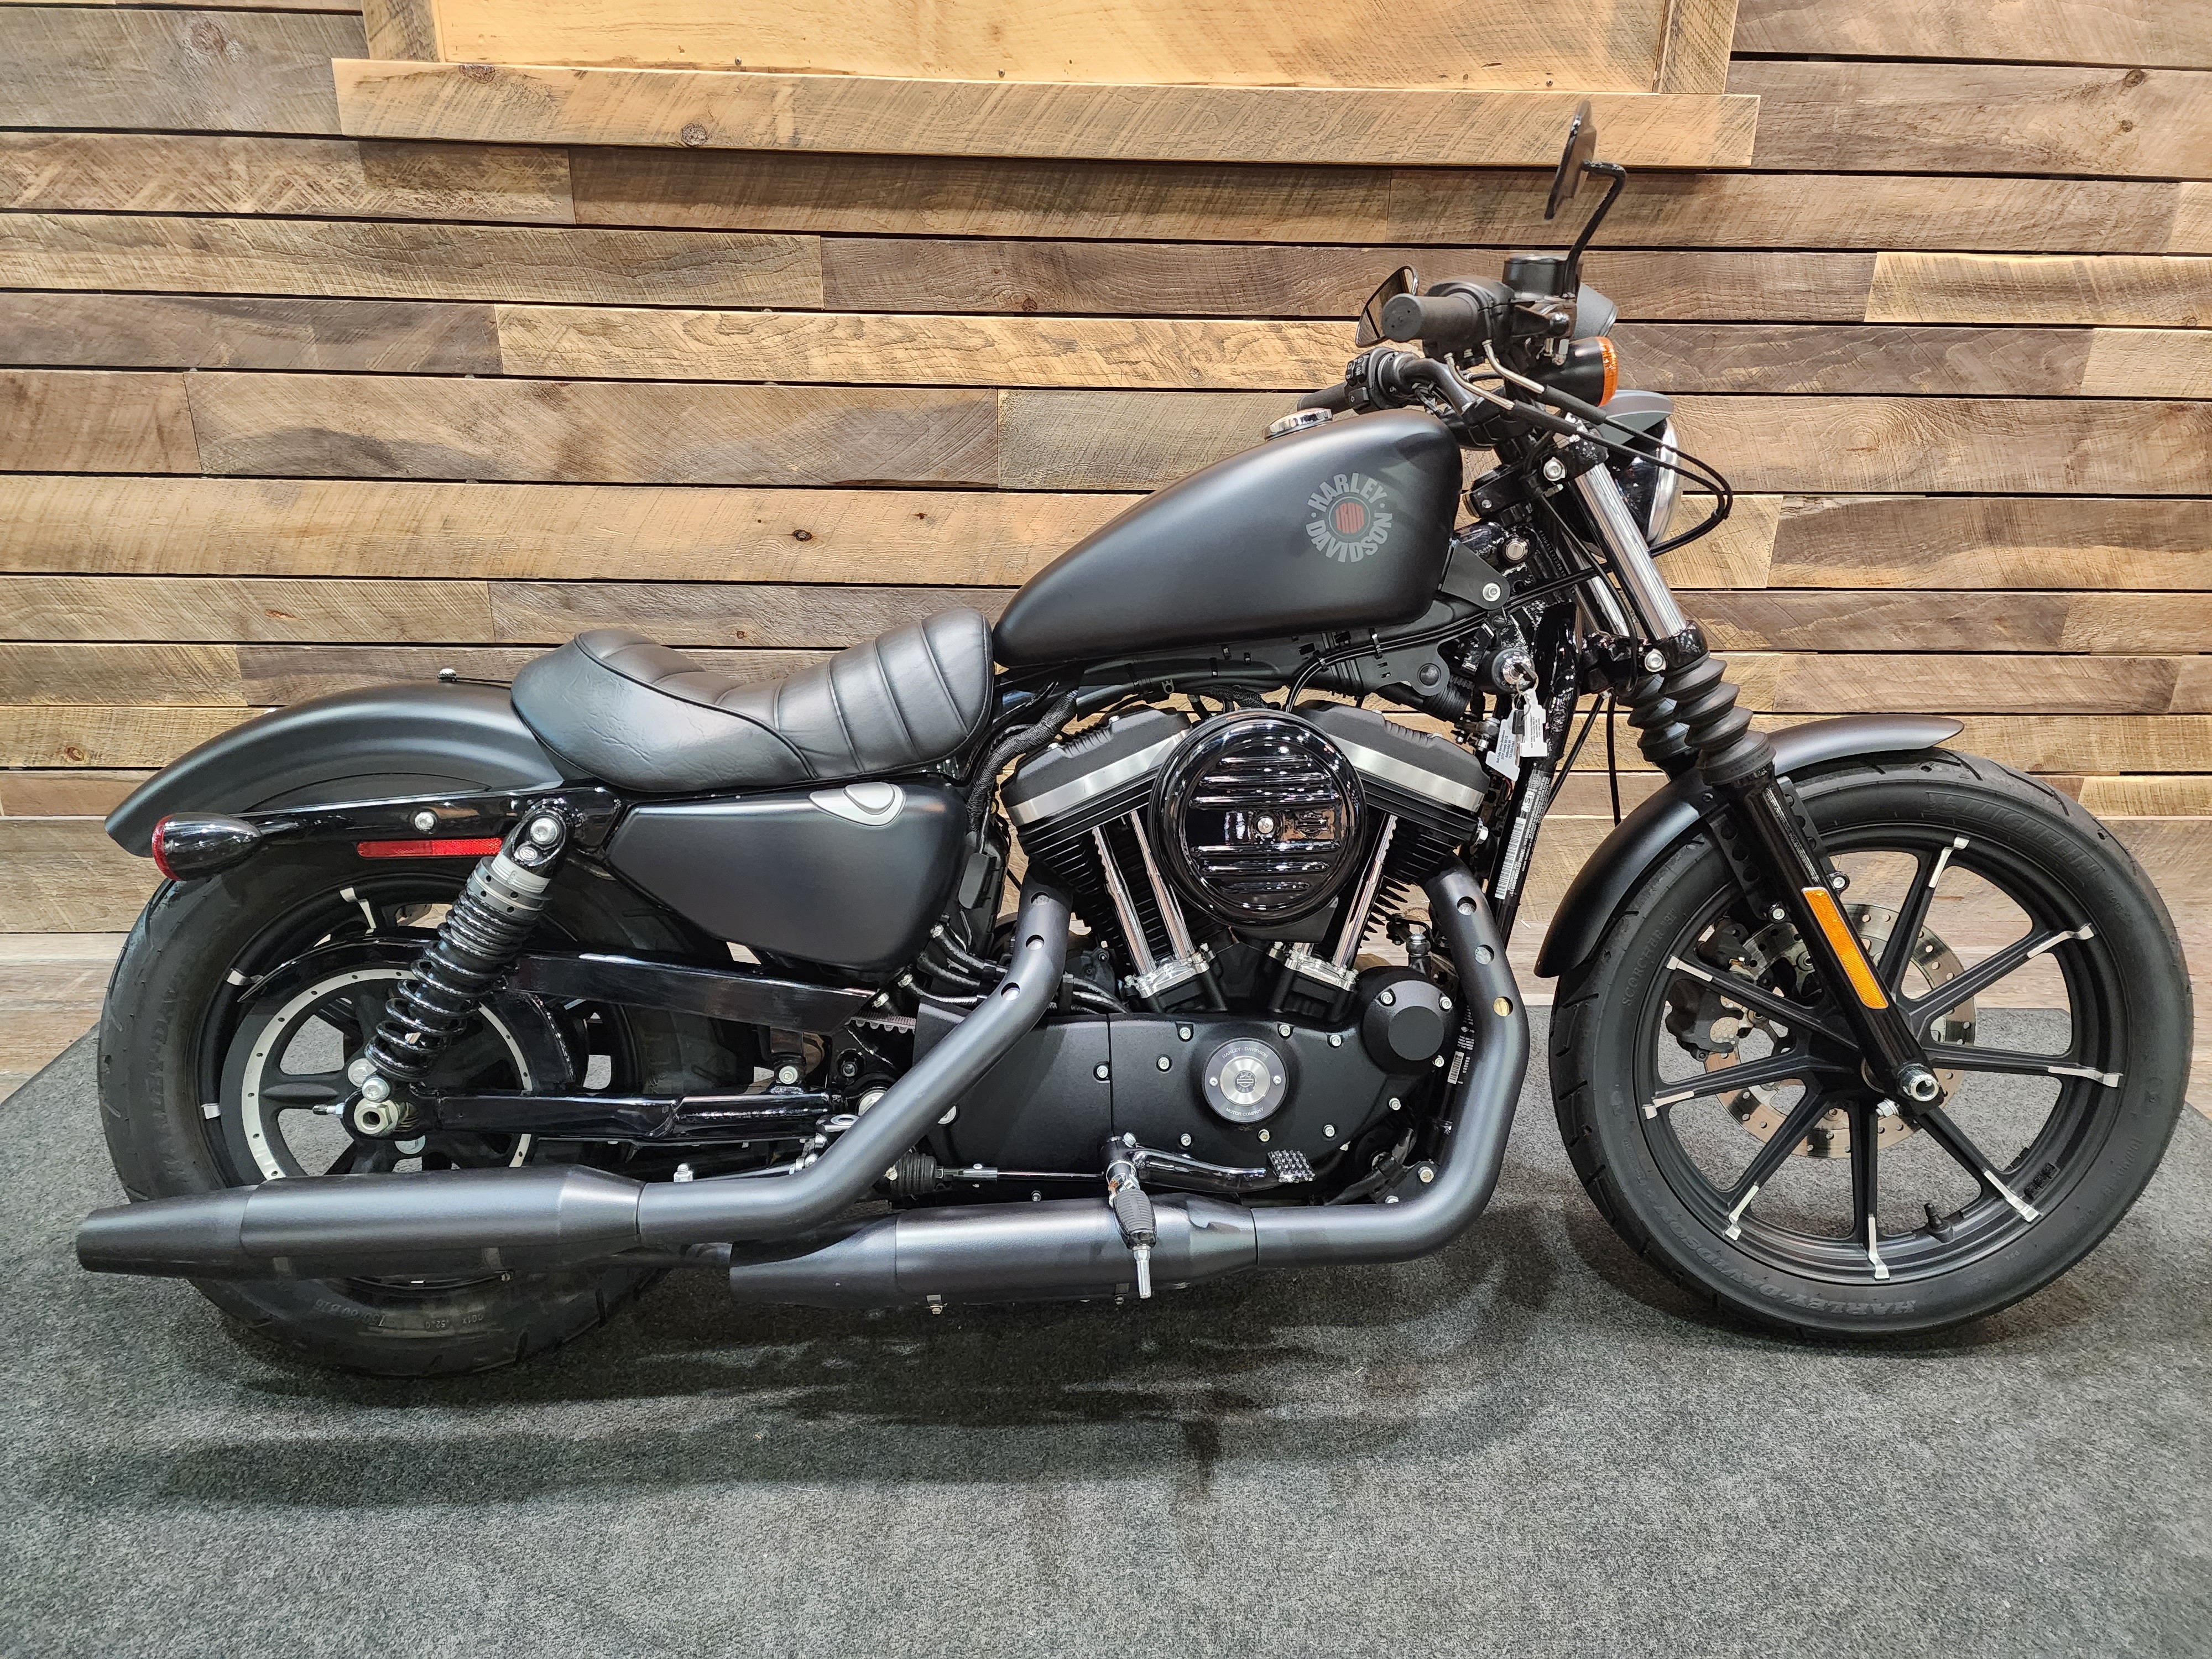 2021 Harley-Davidson Cruiser XL 883N Iron 883 at Bull Falls Harley-Davidson